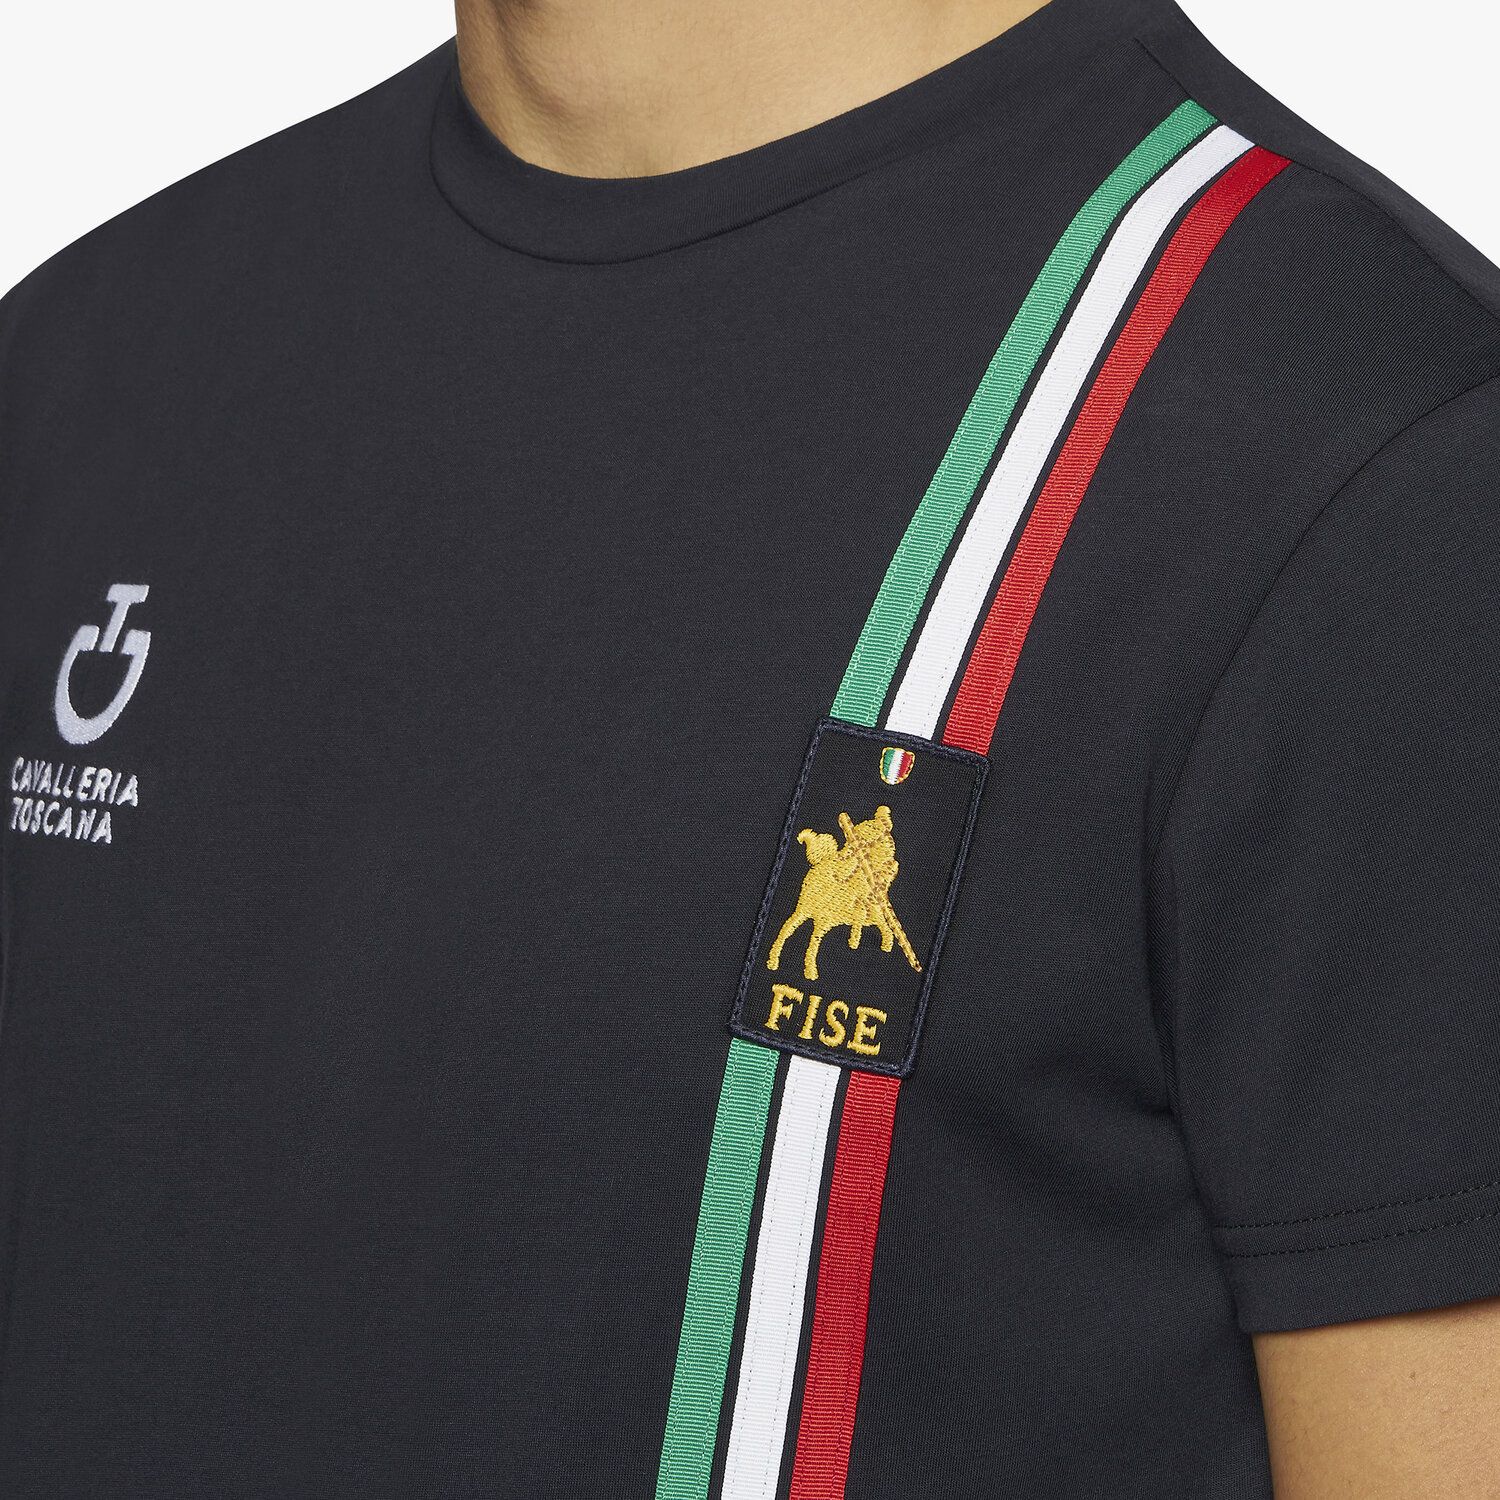 Cavalleria Toscana Man's FISE short sleeved t-shirt NAVY MULTI PATCH-6